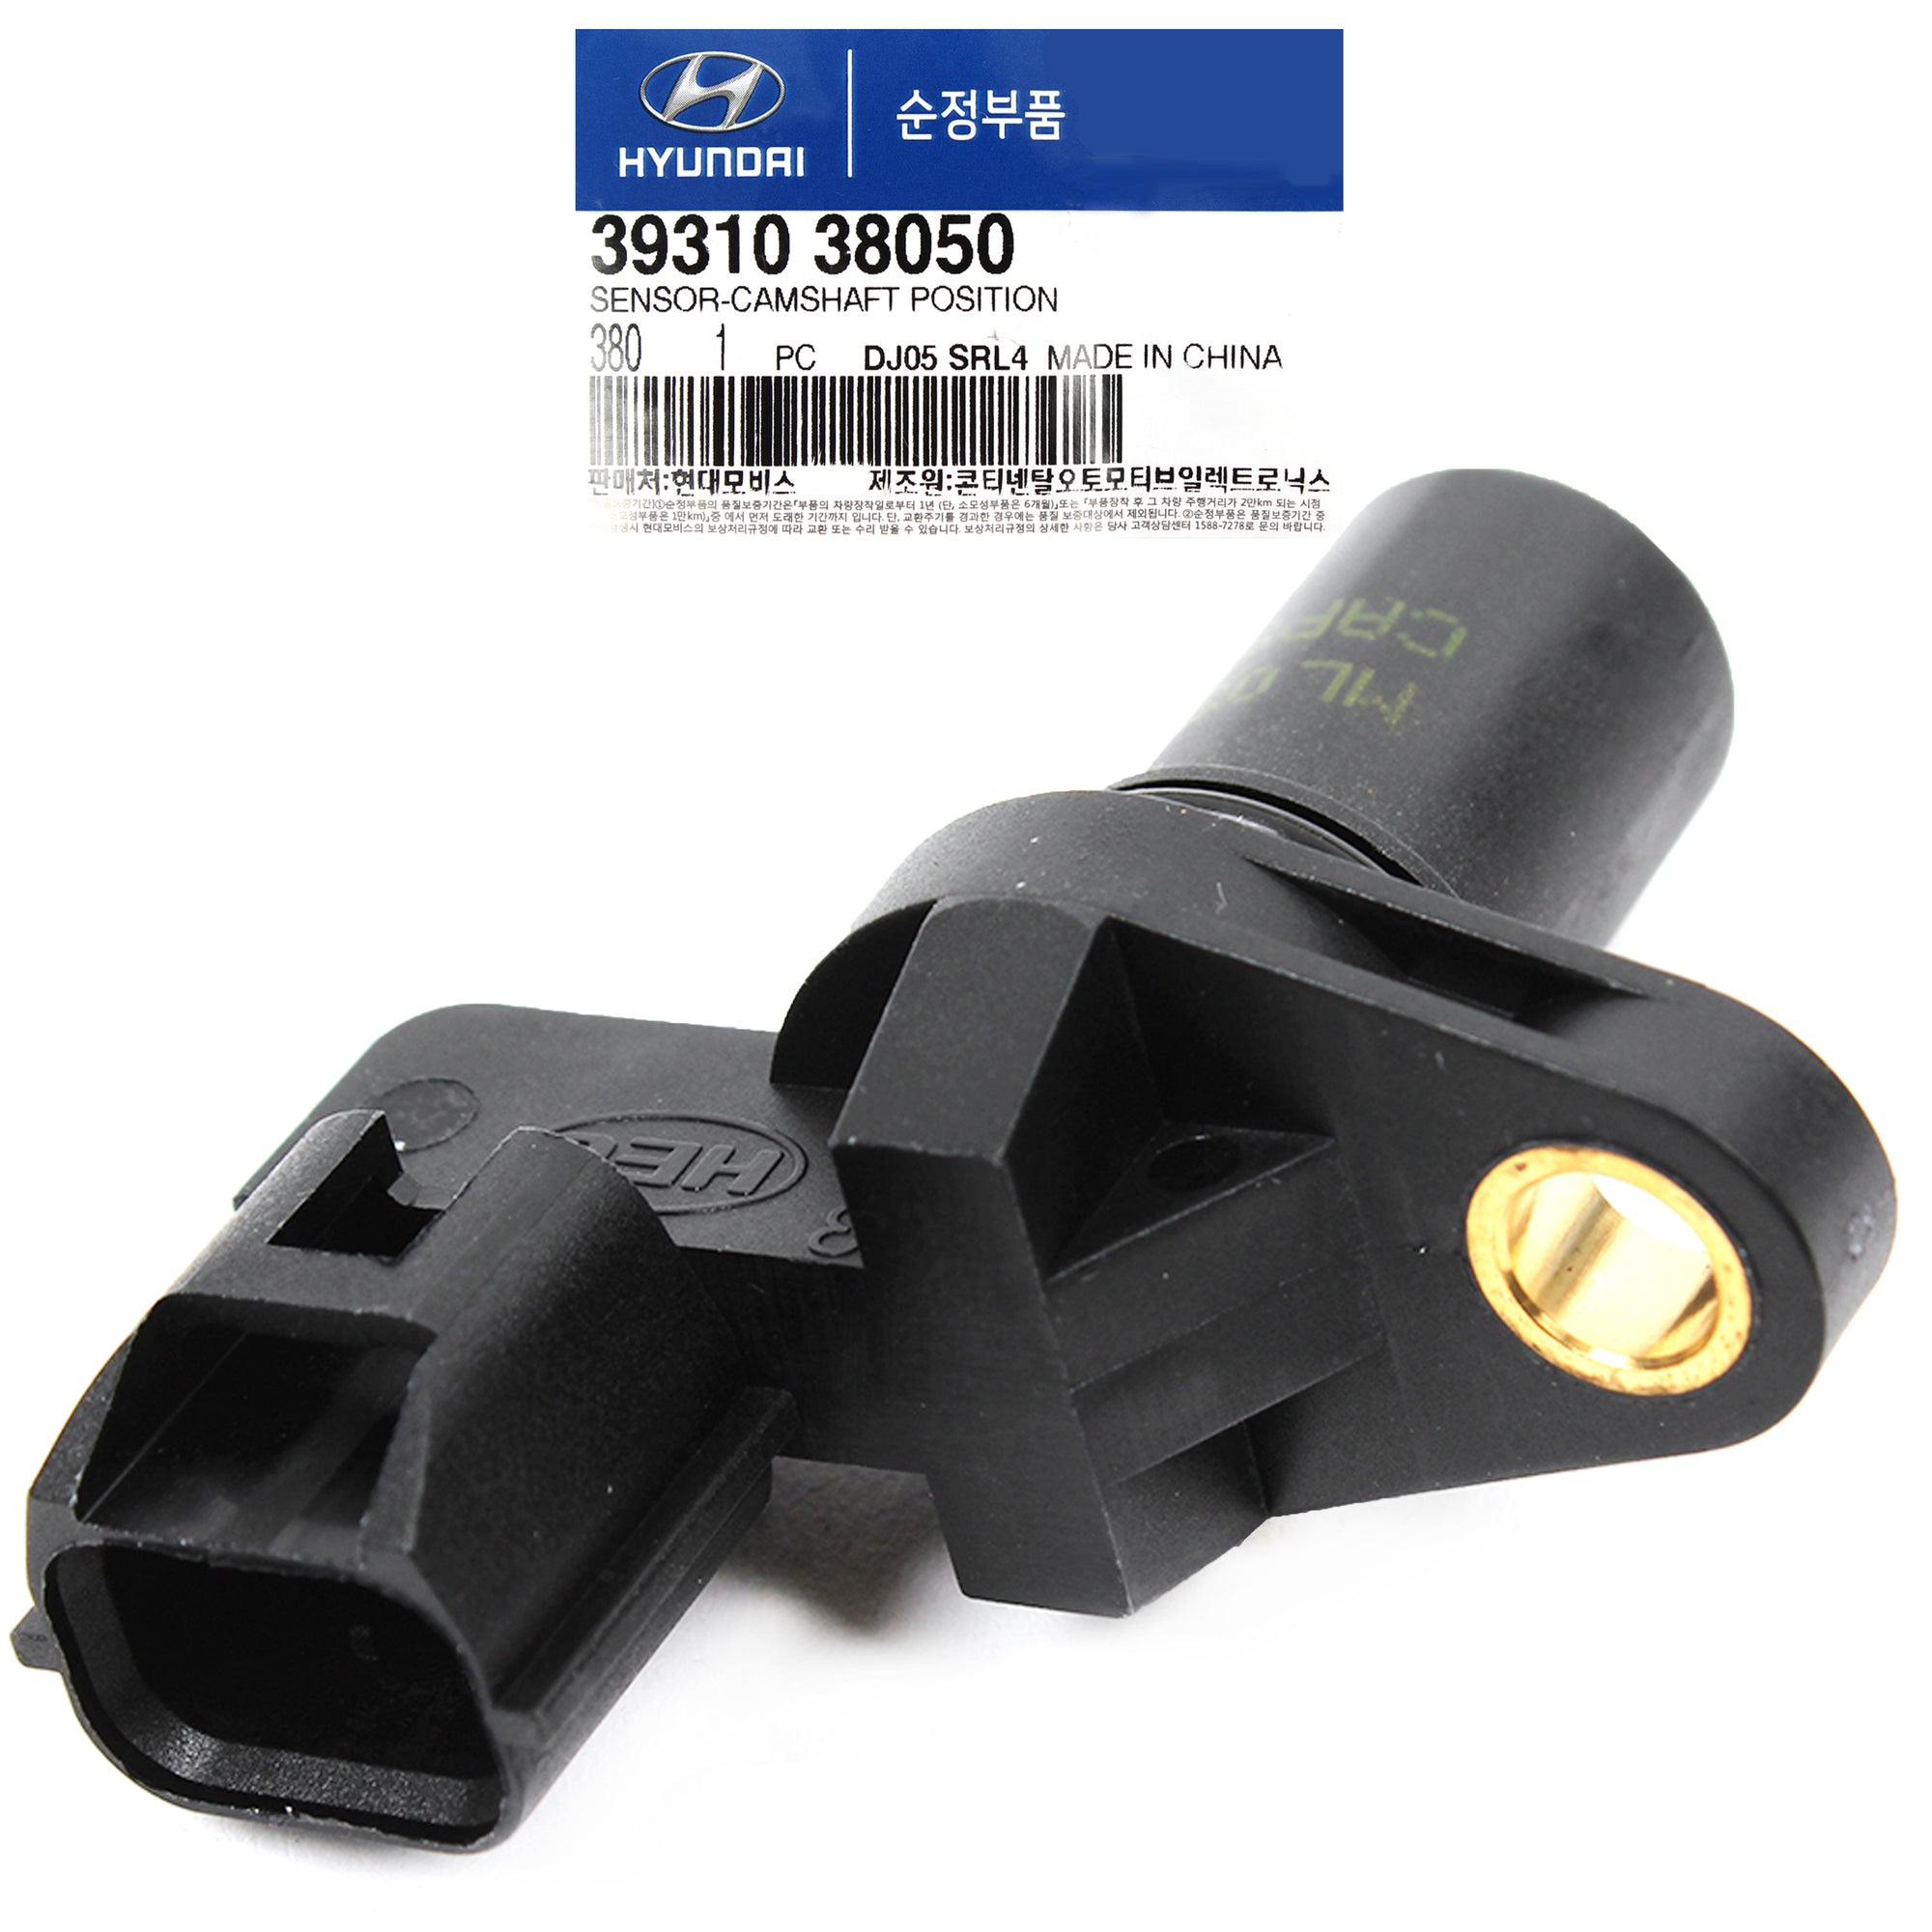 39310-38050 GENUINE Camshaft Position Sensor for 99-05 Hyundai SONATA 2.4L